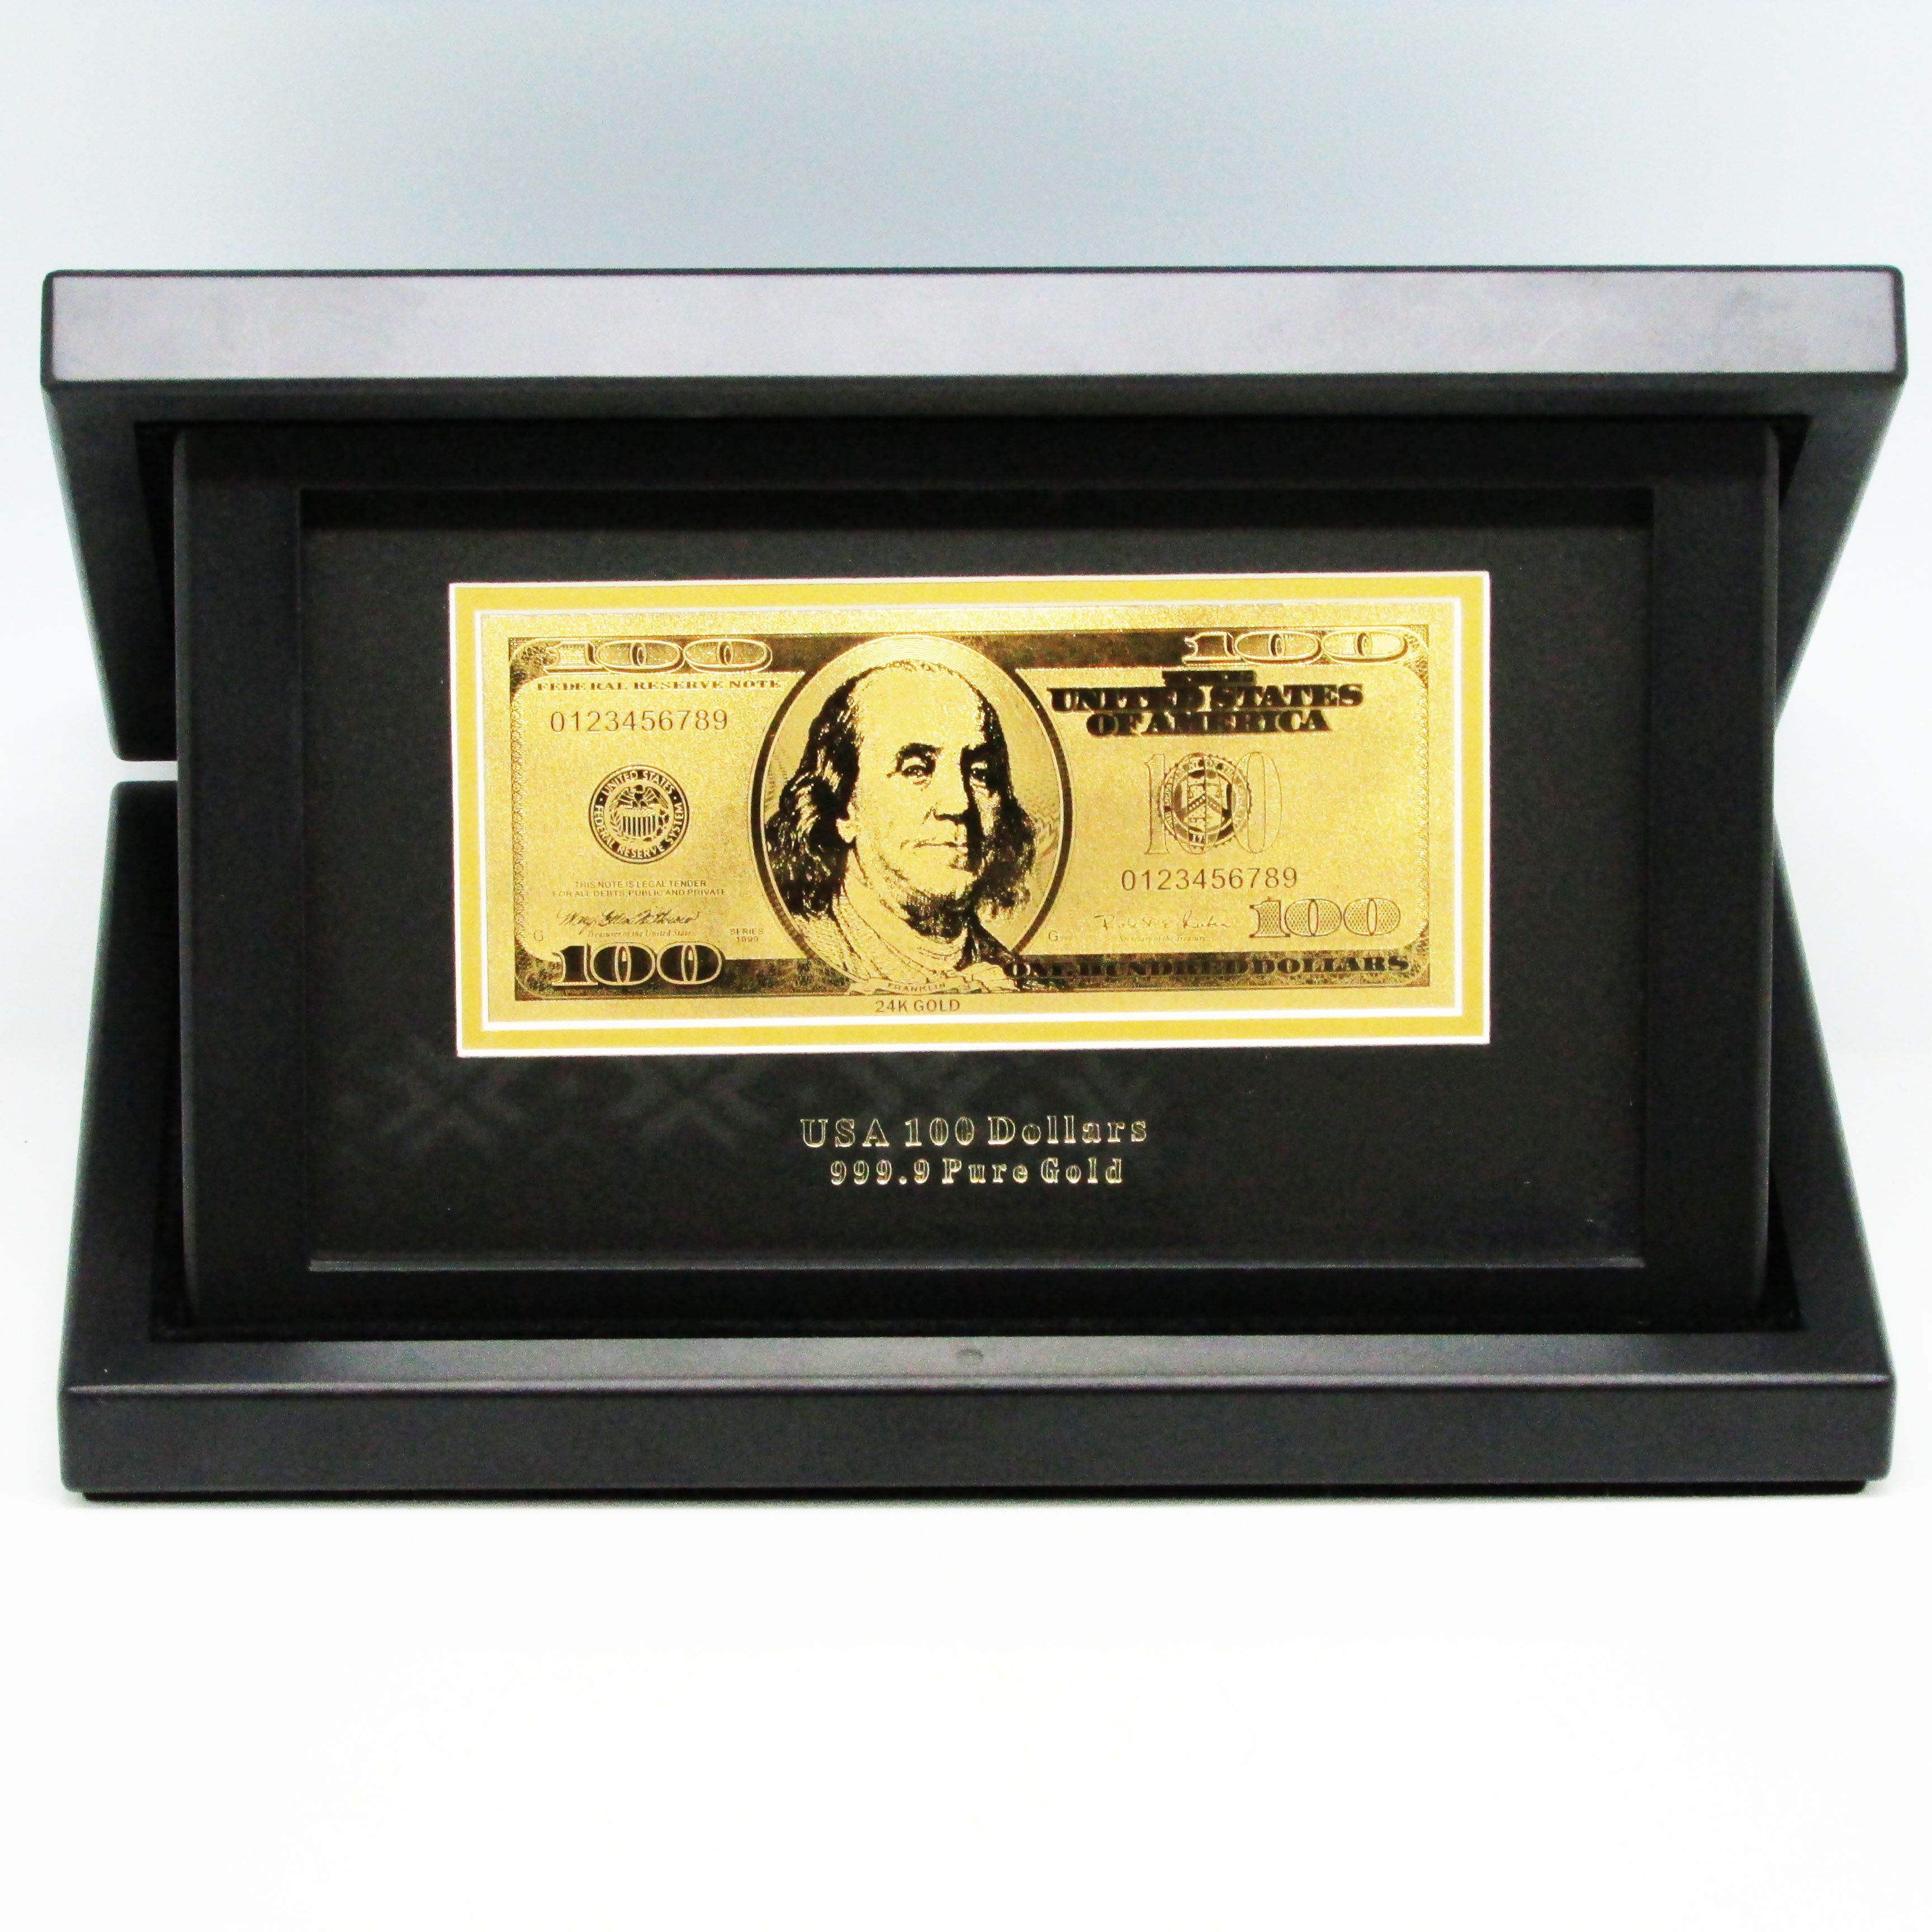 Золотая банкнота доллара США в футляре